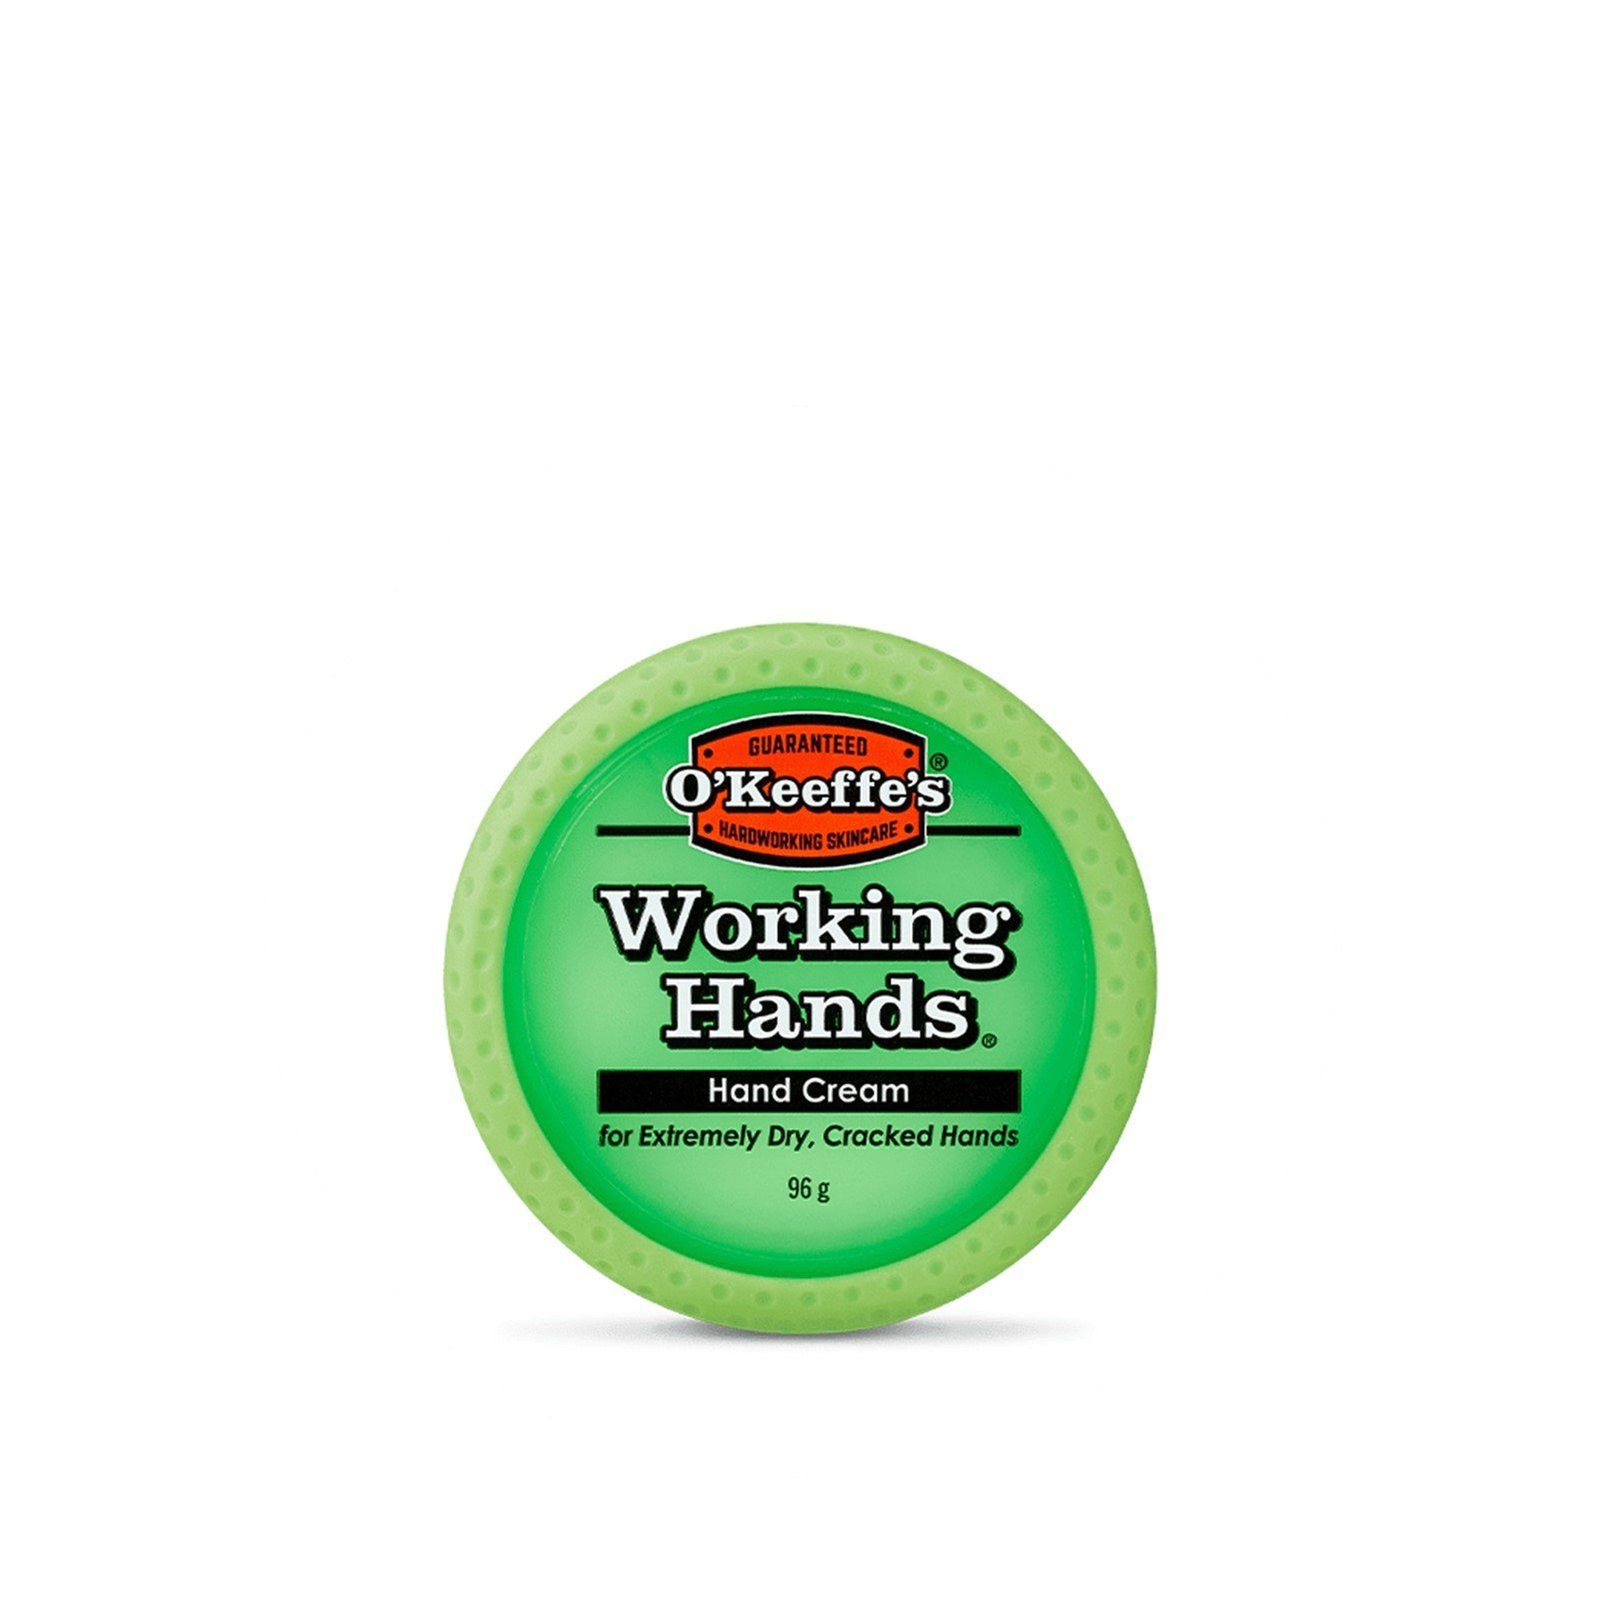 O'Keeffe's Working Hands Hand Cream 96g (3.38 oz)